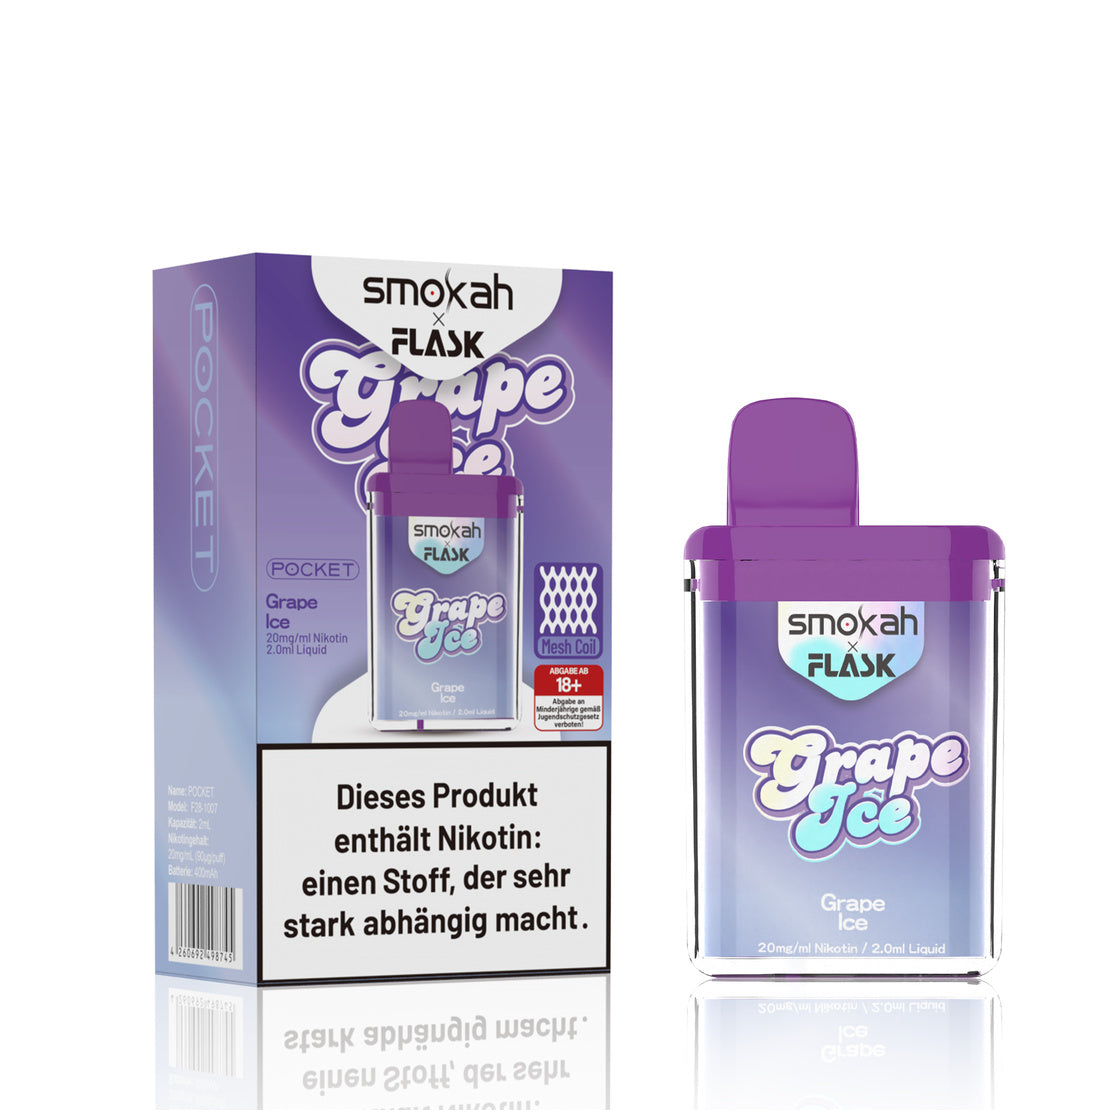 Smokah x Flask Pocket Vape: Traube Ice – Kühler Genuss, reiches Aroma